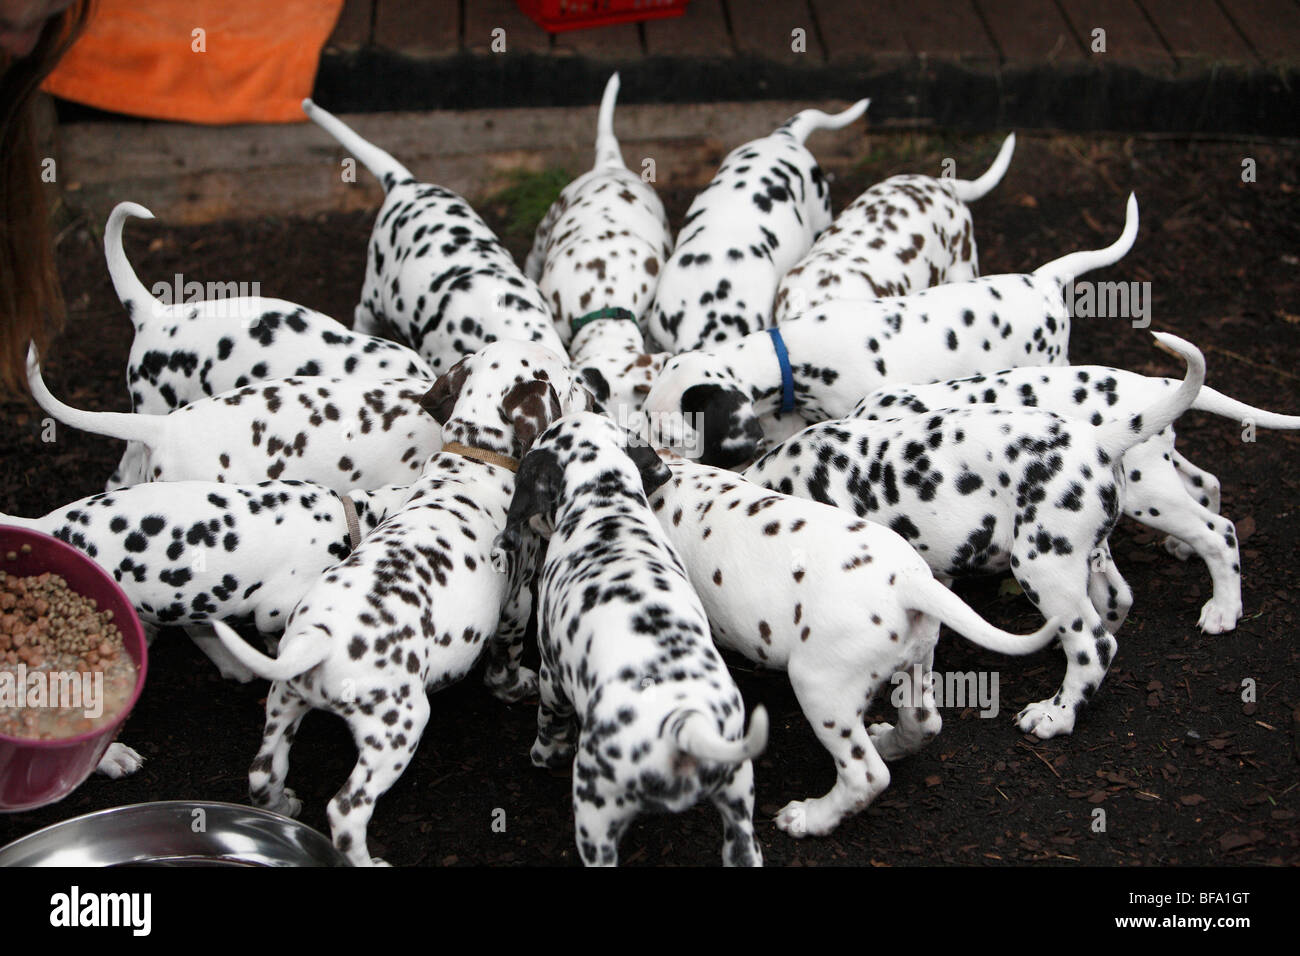 Dalmatian (Canis lupus f. familiaris), 13 puppies around a feeding dish, Germany Stock Photo